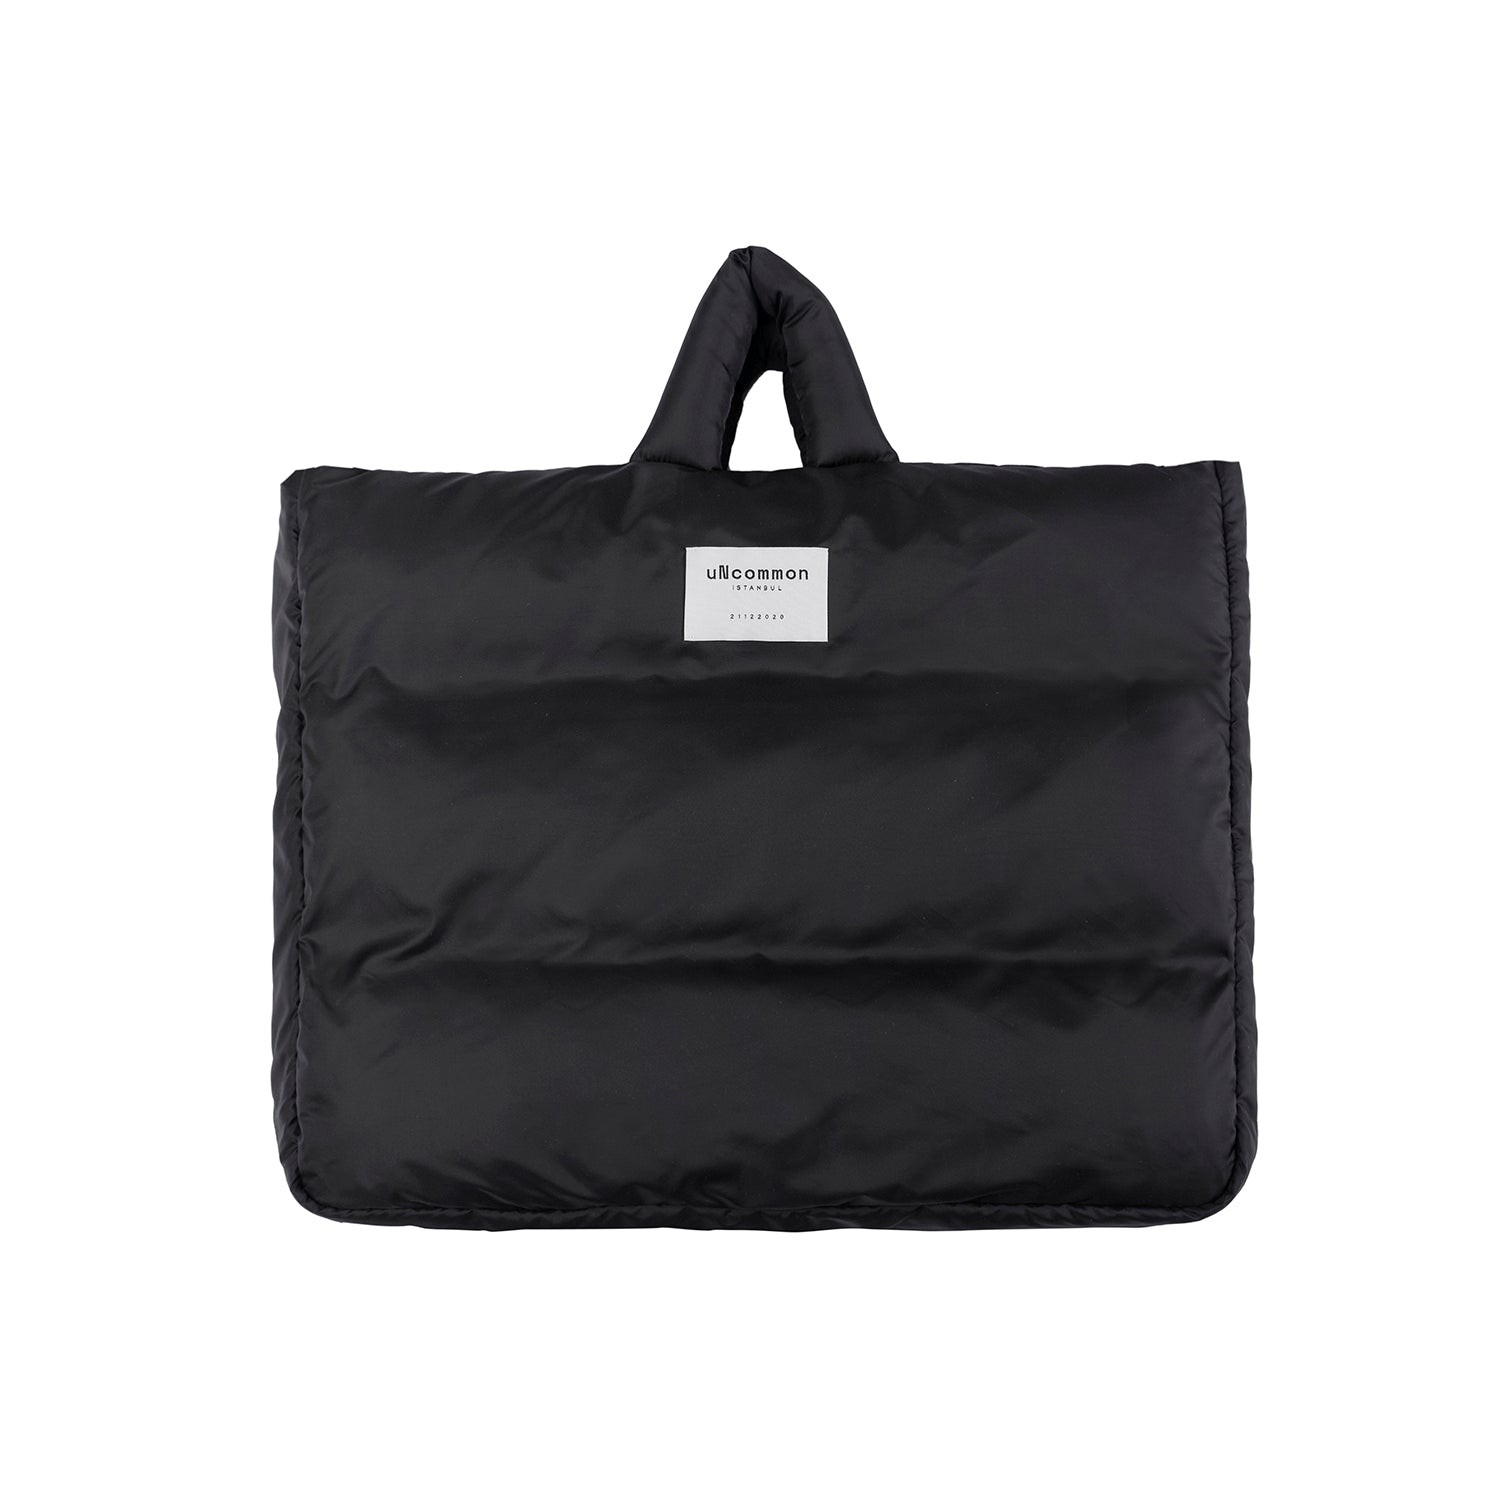 uNcommon Puffy Tote Bag Black